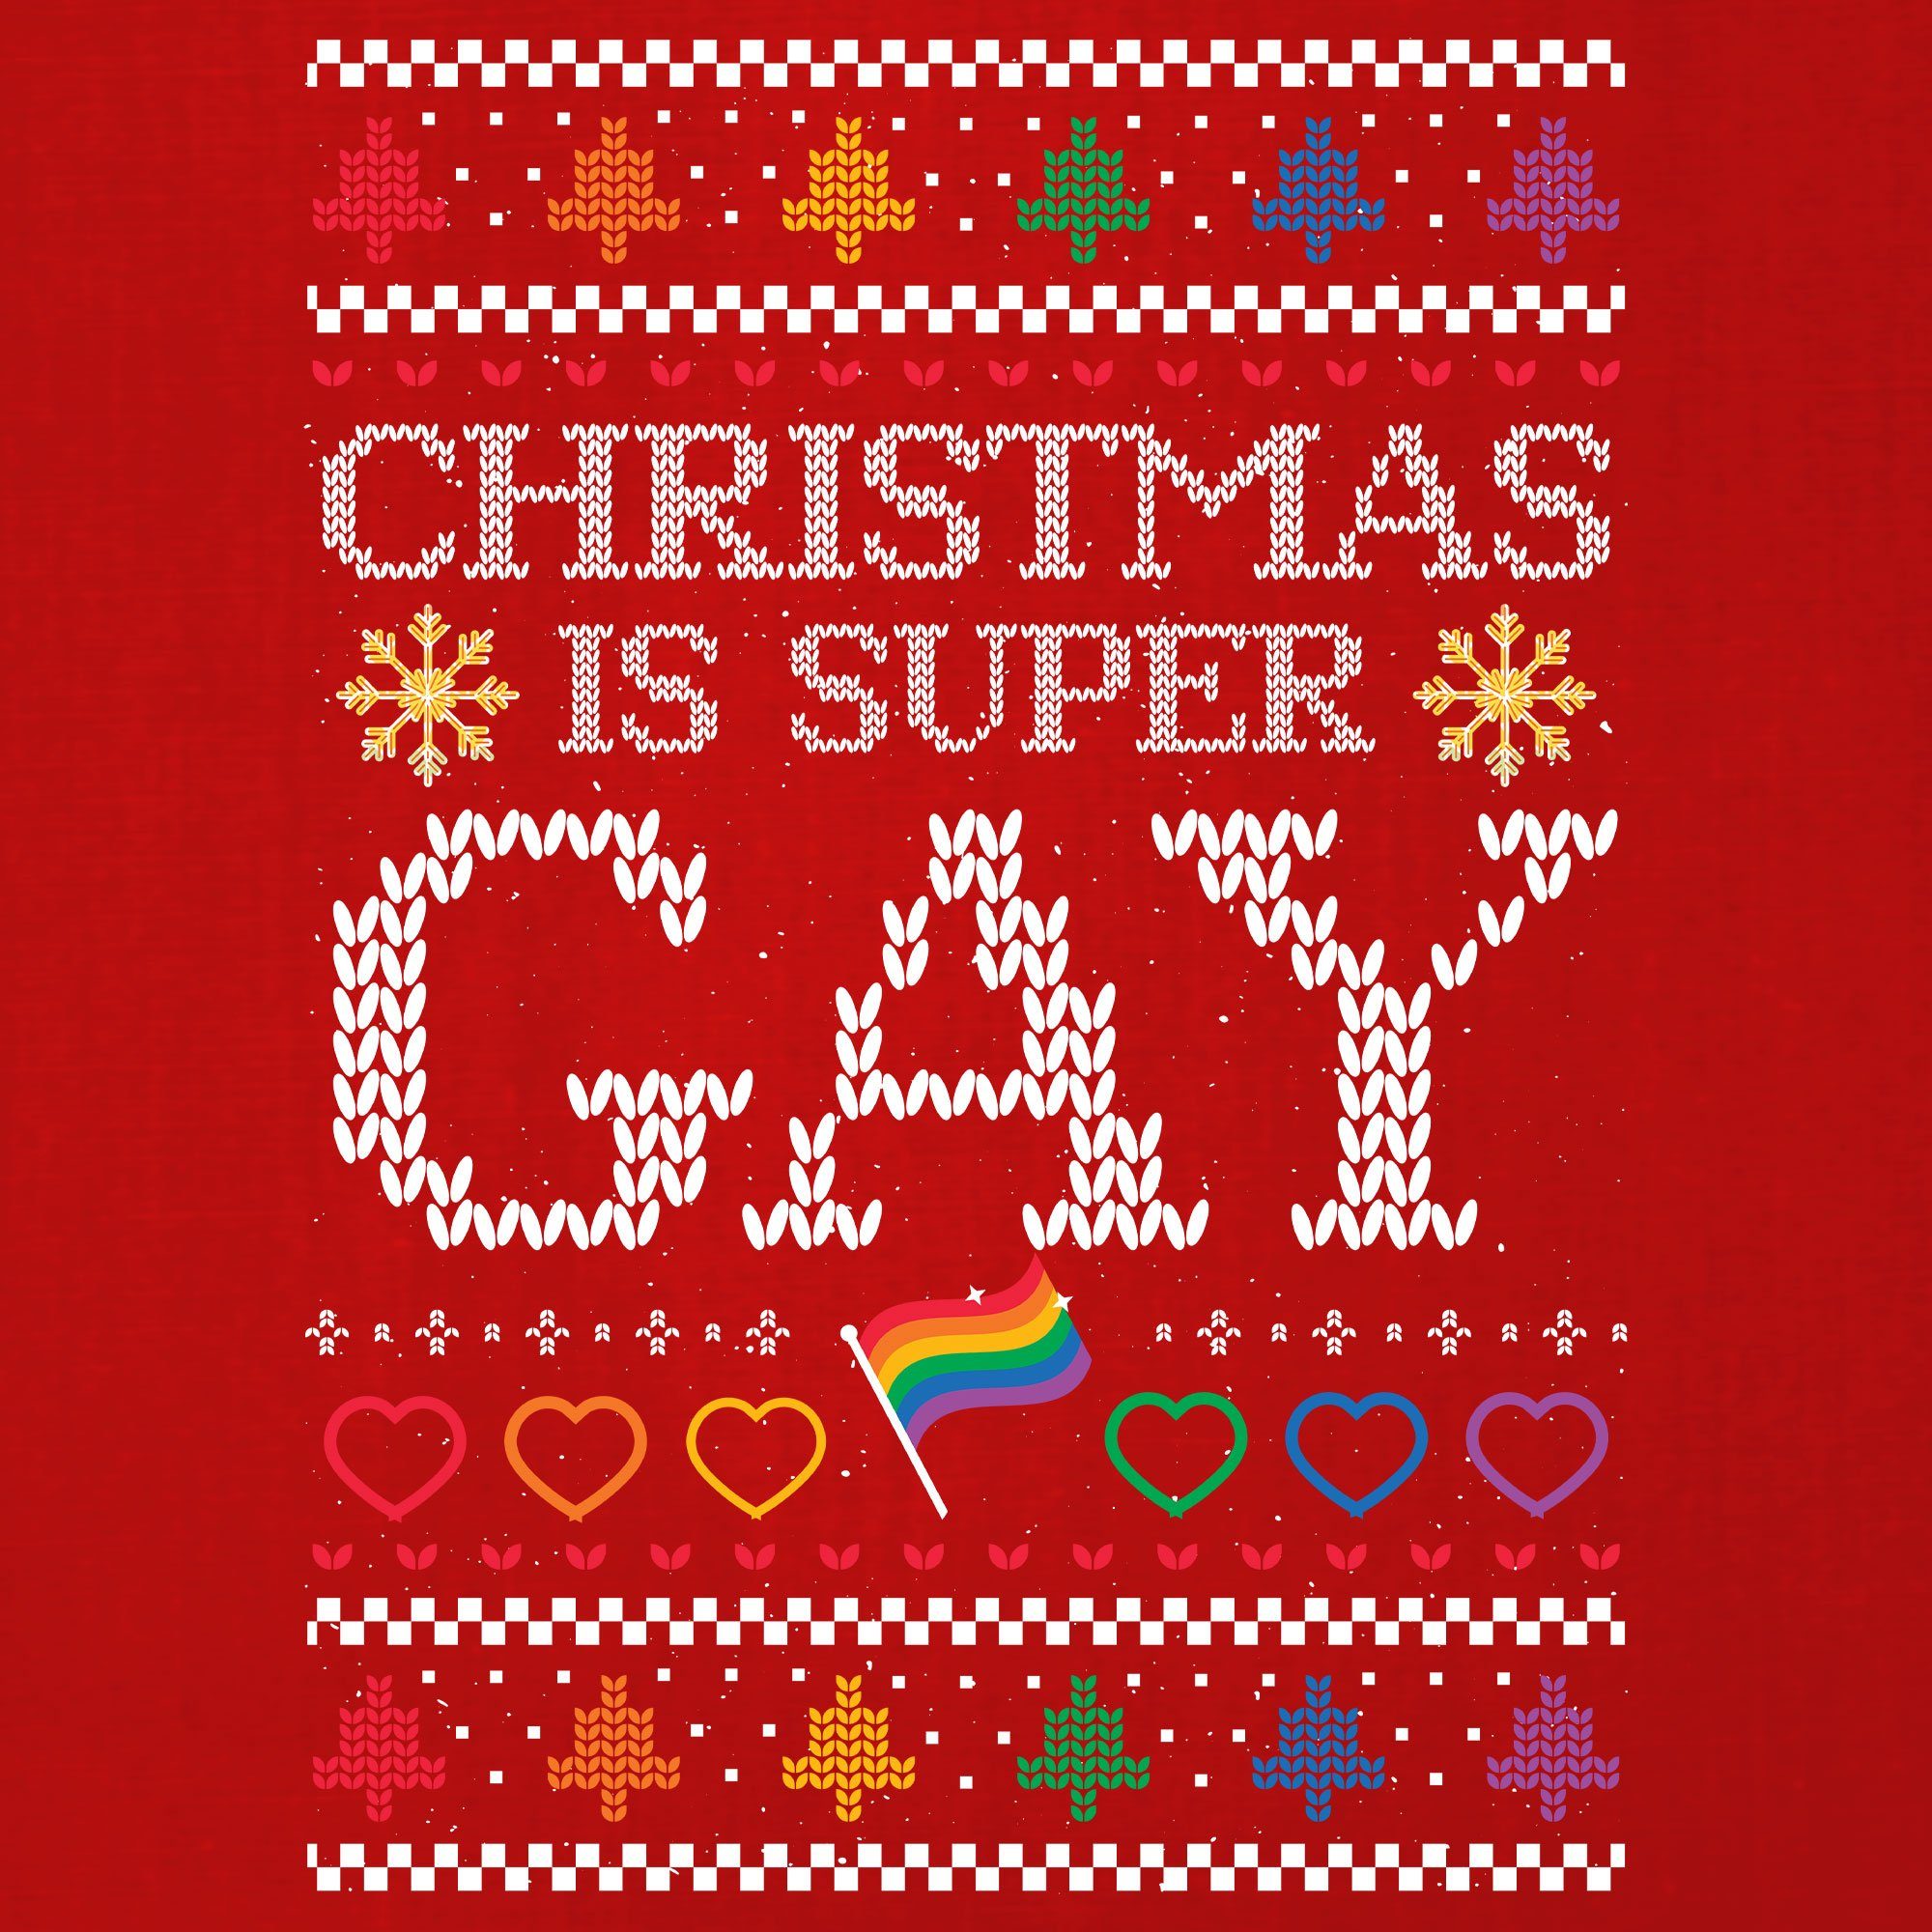 X-mas - LGBT Christmas Quattro (1-tlg) Formatee Rot Weihnachtsgeschenk Gay Kurzarmshirt Herren Weihnachten T-Shi